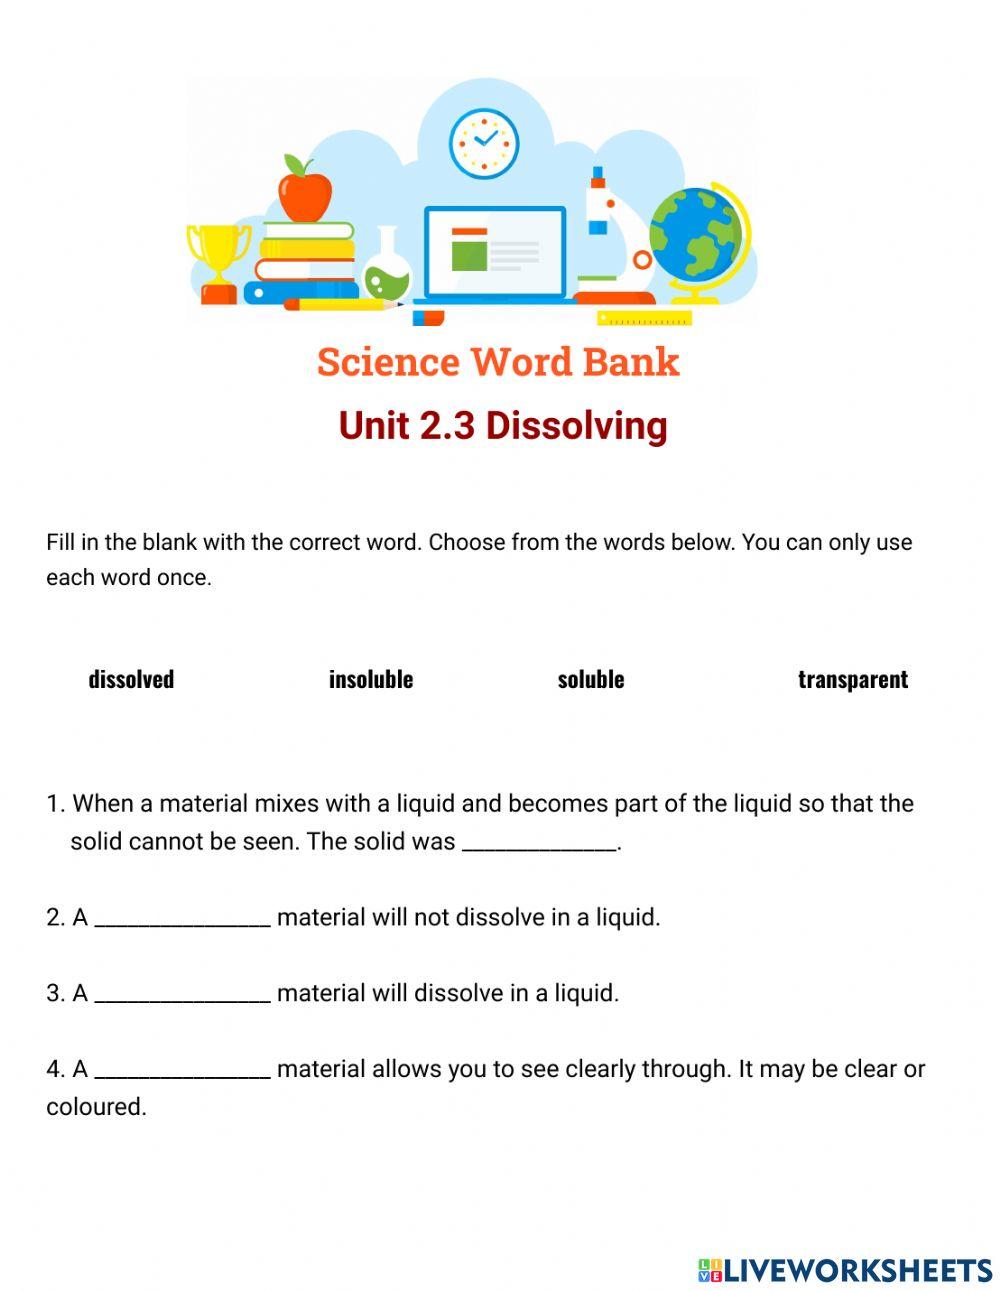 Science Word Bank - Unit 2.3 Dissolving